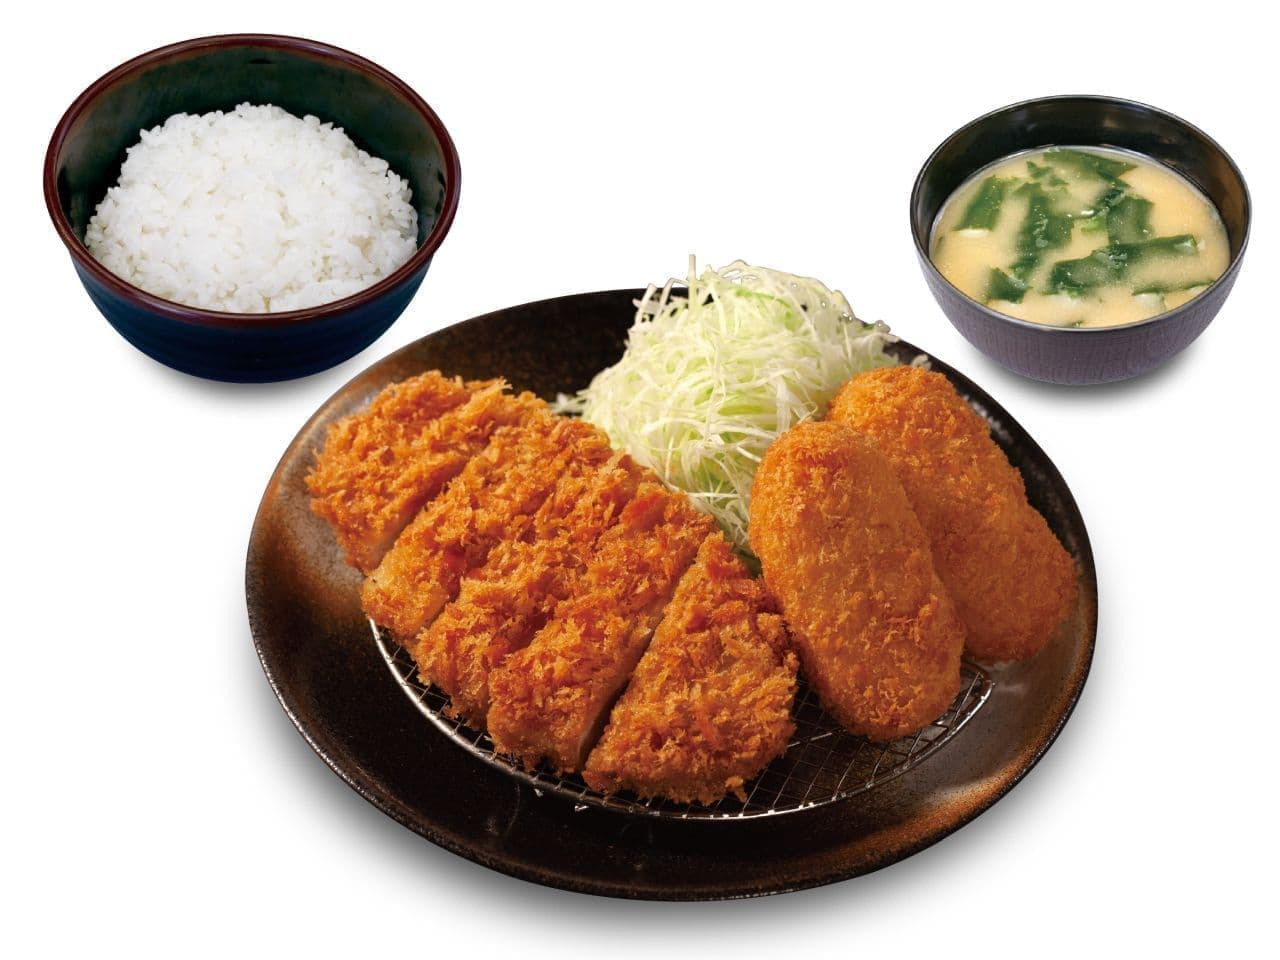 Matsunoya, Matsunoya "Roast pork cutlet & crab cream croquette (2 pieces) set meal